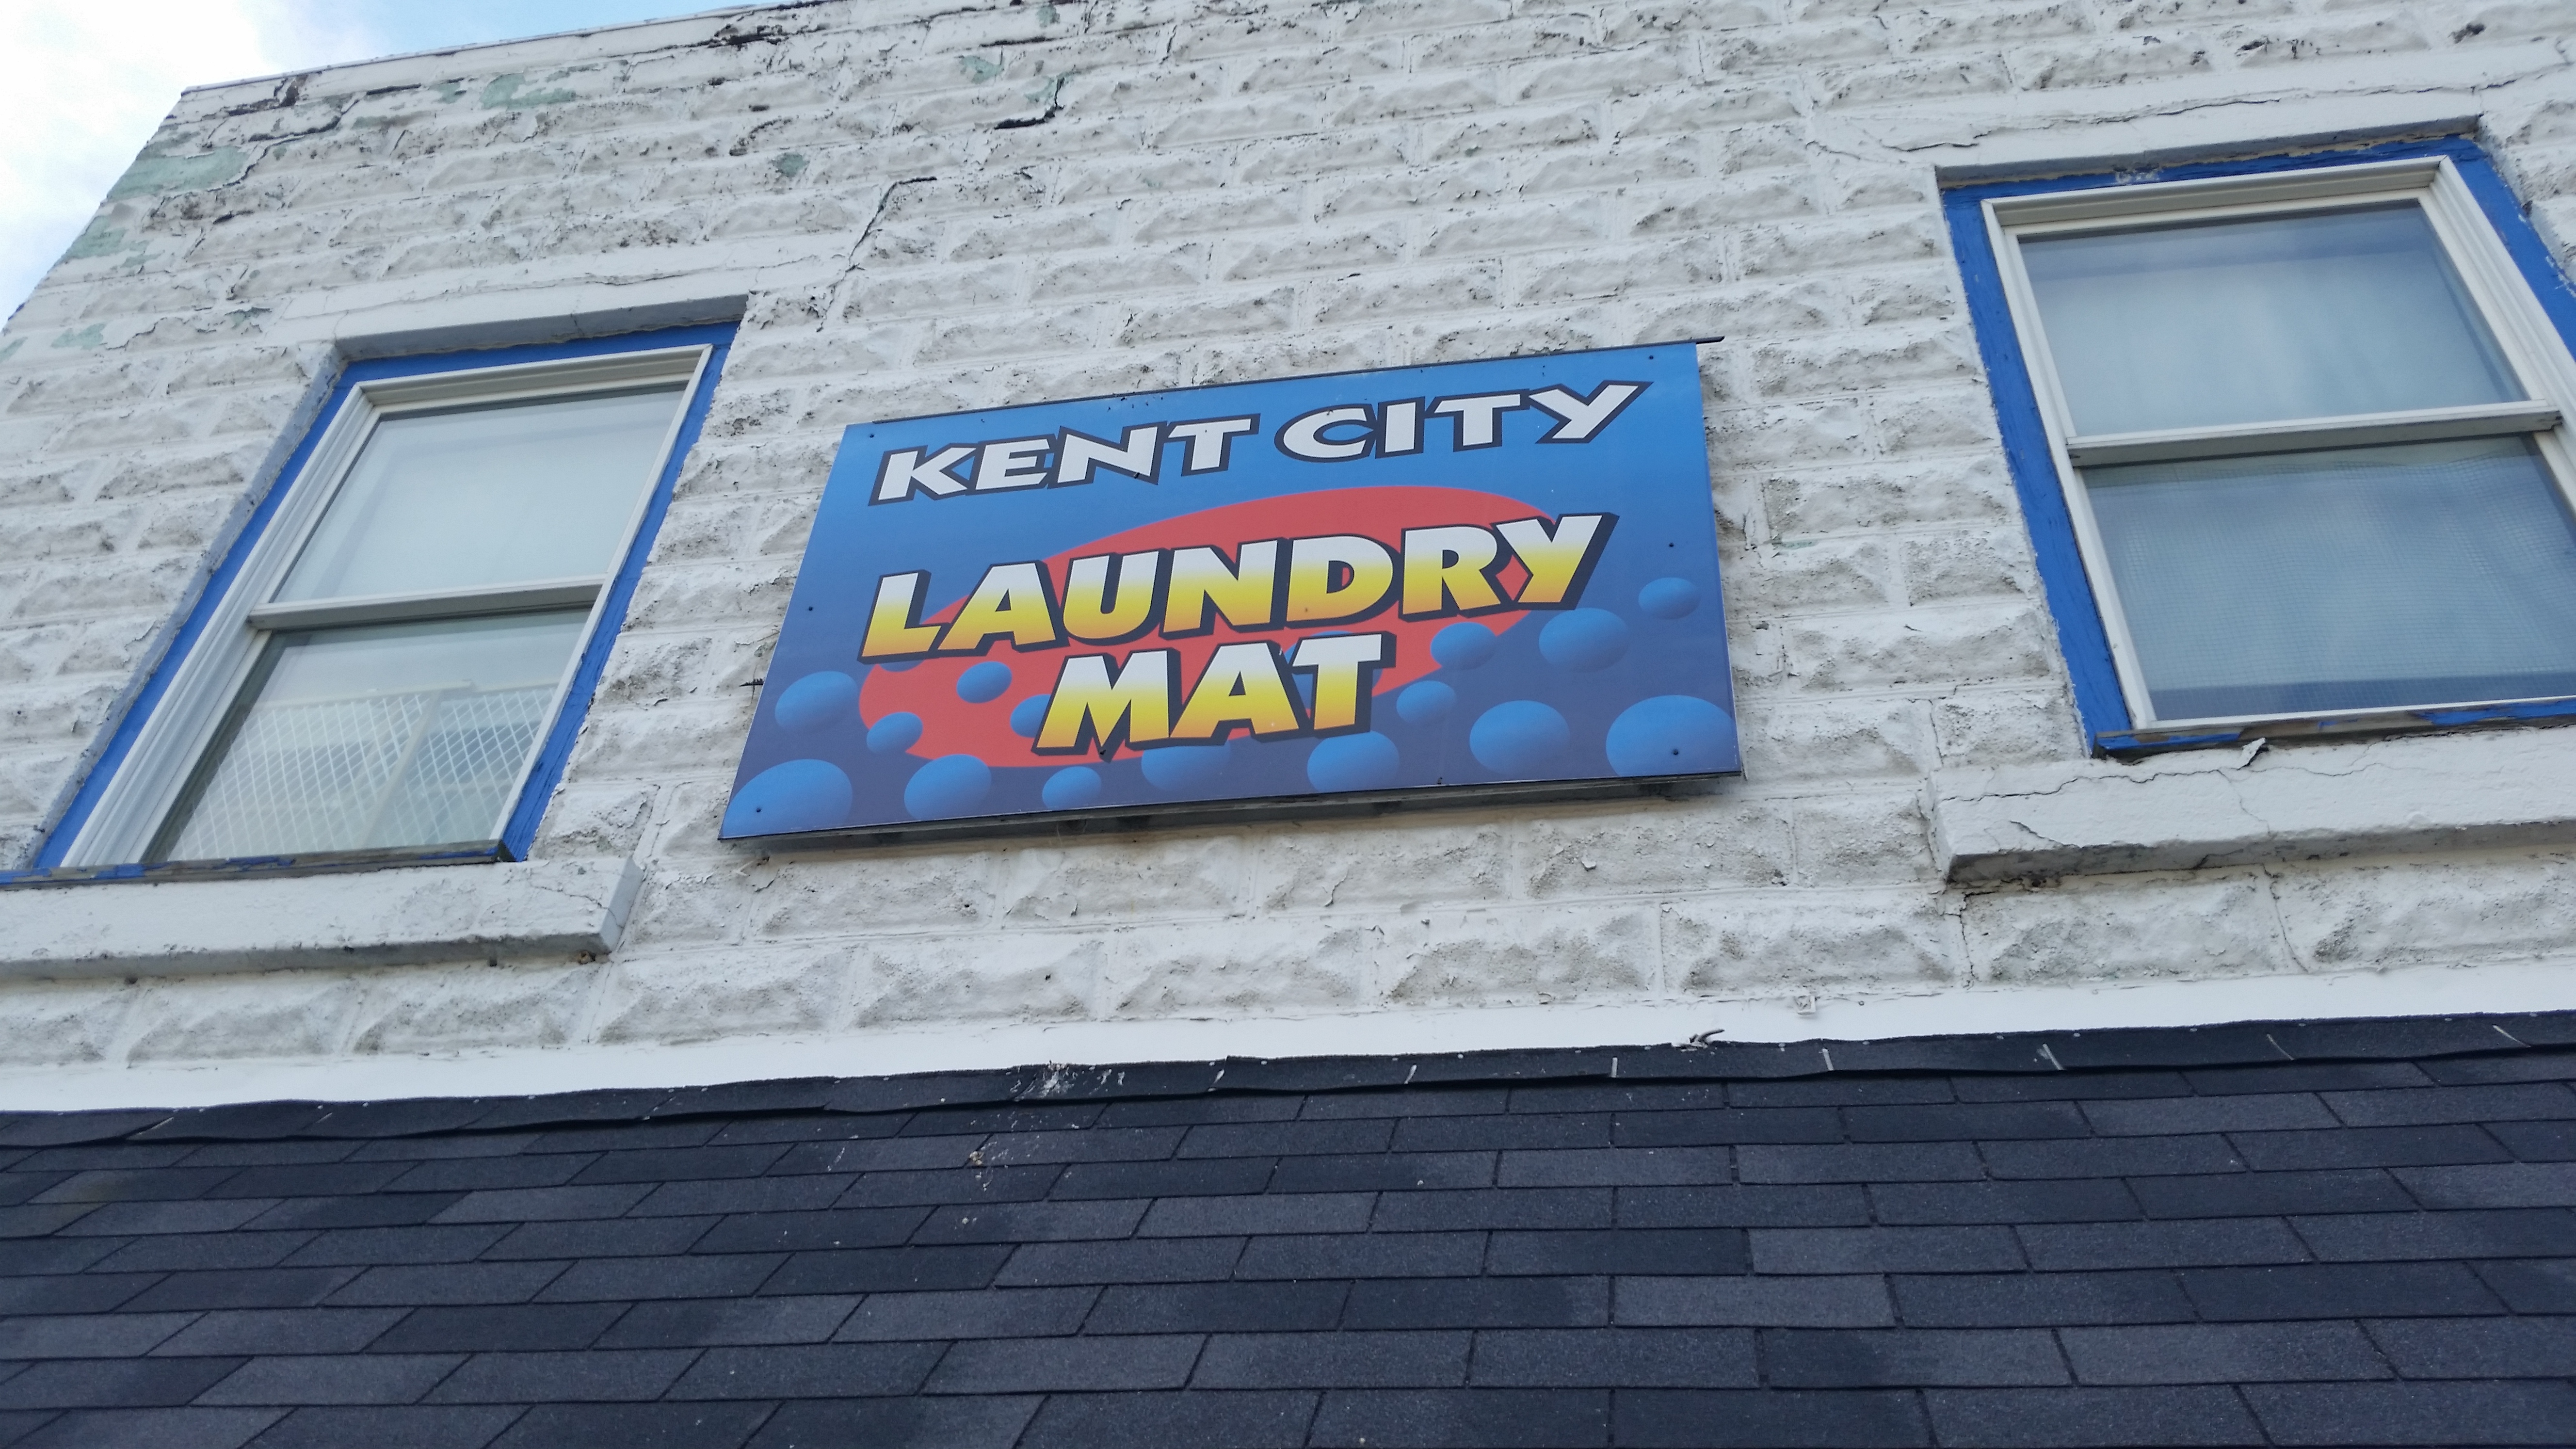 Laundry mat